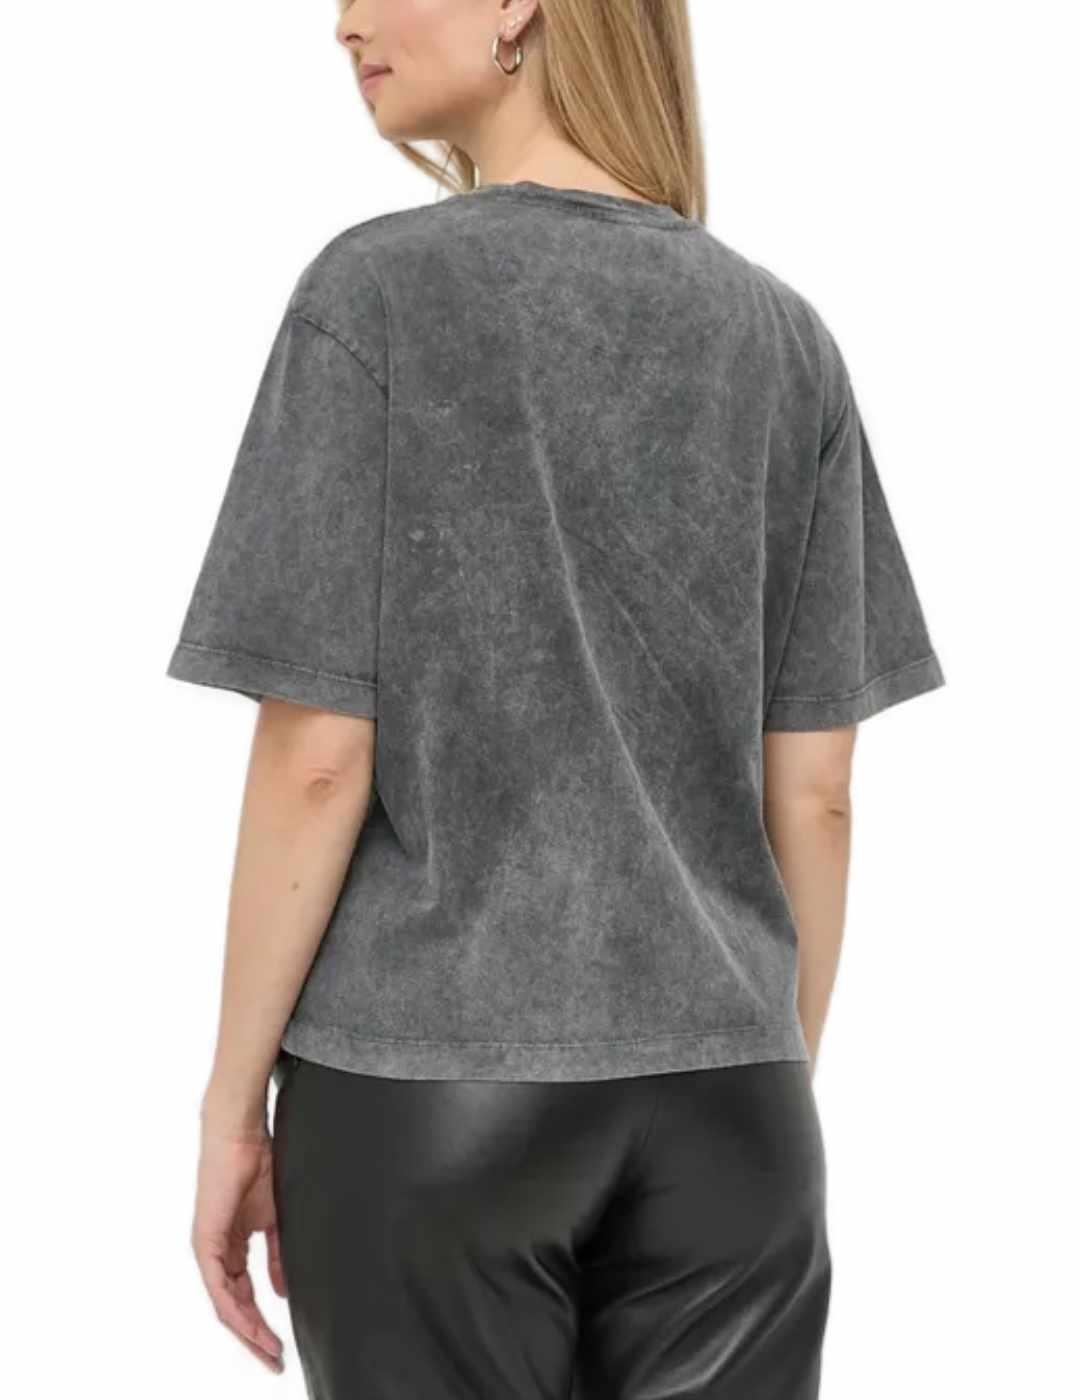 Camiseta Guess Celia gris oscuro para mujer